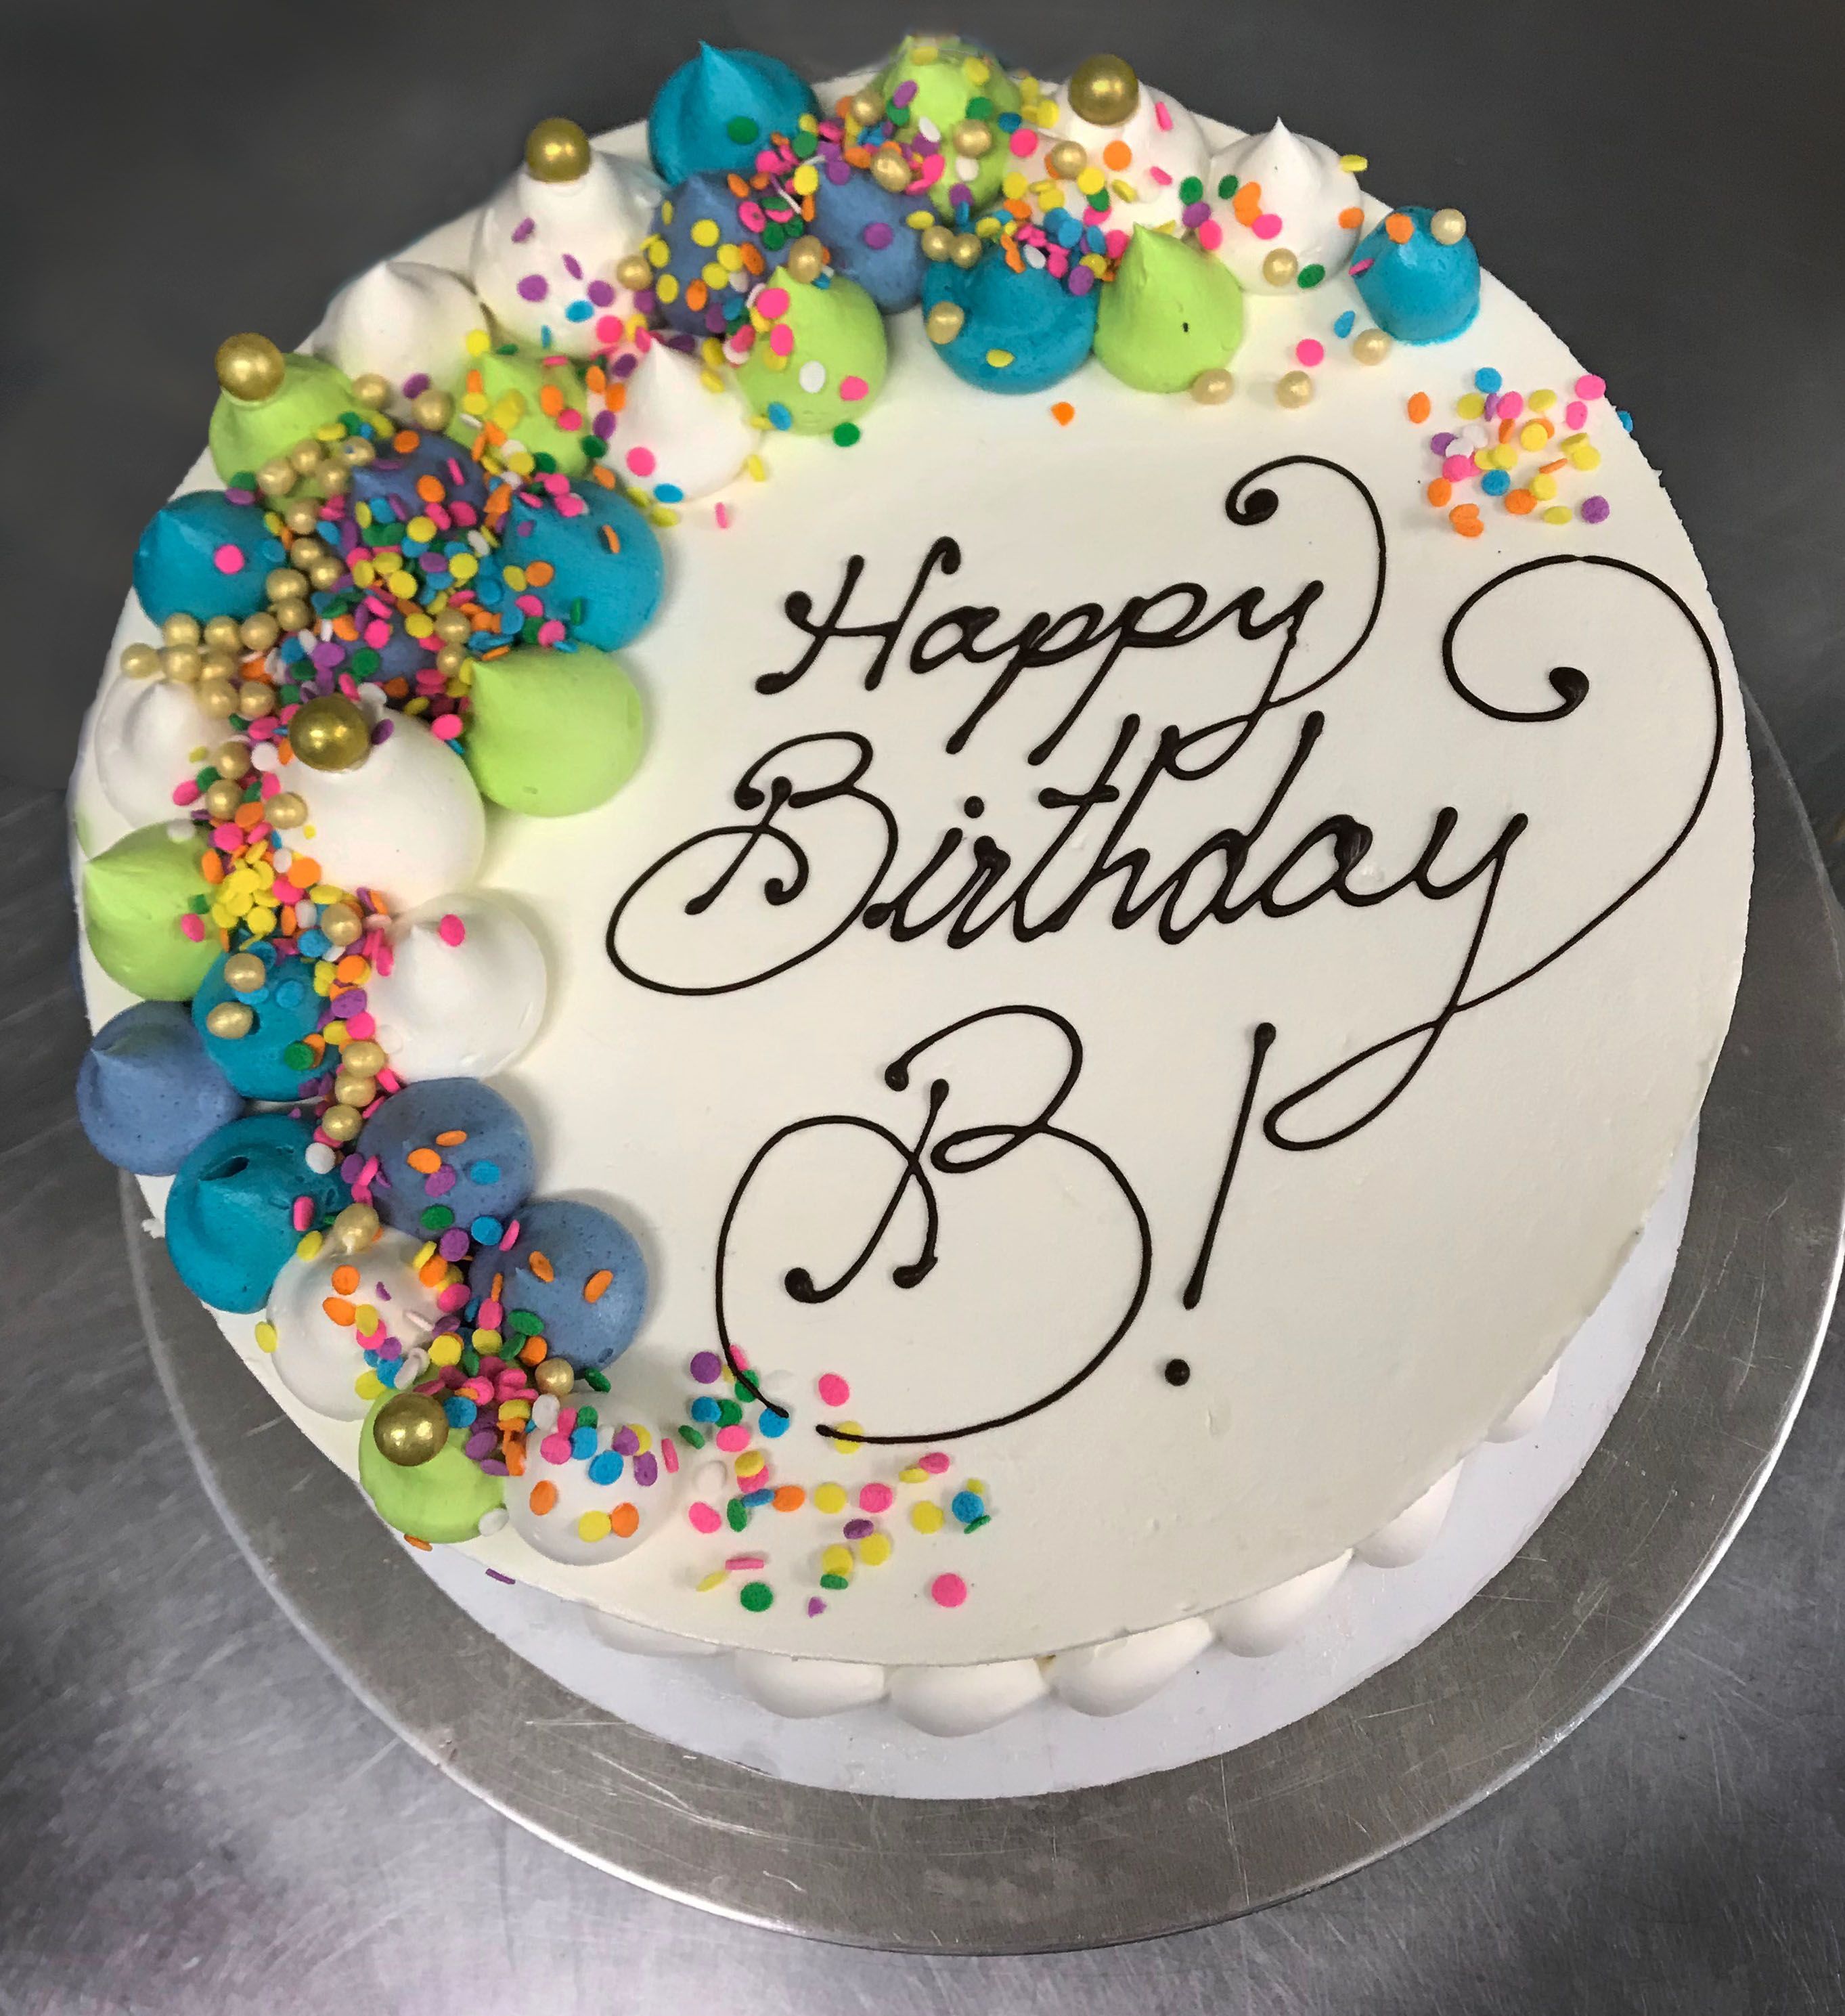 Chez Hilda Pâtisserie - Beyoncé themed birthday cake #chezhildapatisserie  #chefsgossips #ammancakes #beyoncé #beyoncécake #cakedesigner #birthdaycake  #chefsgossips for info pls call 0799000797 | Facebook